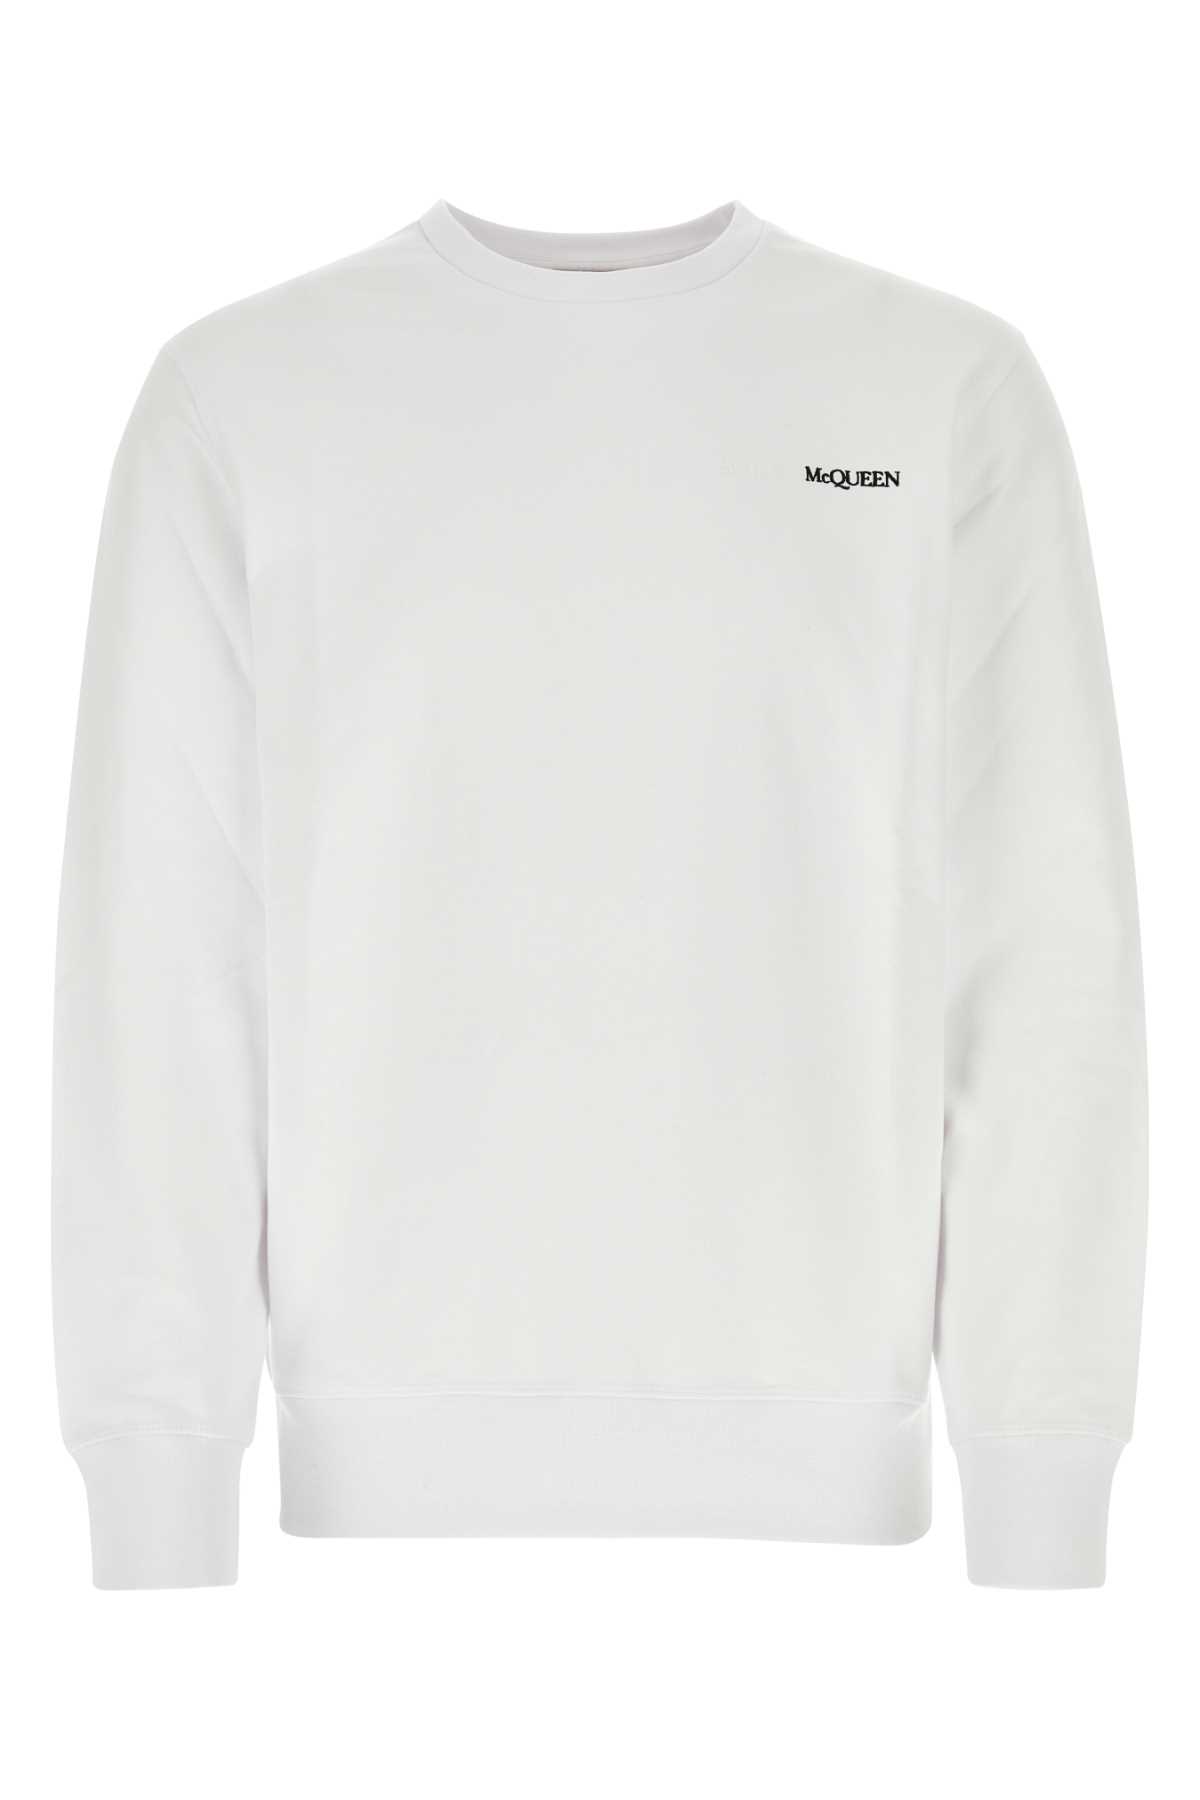 White Cotton Sweatshirt